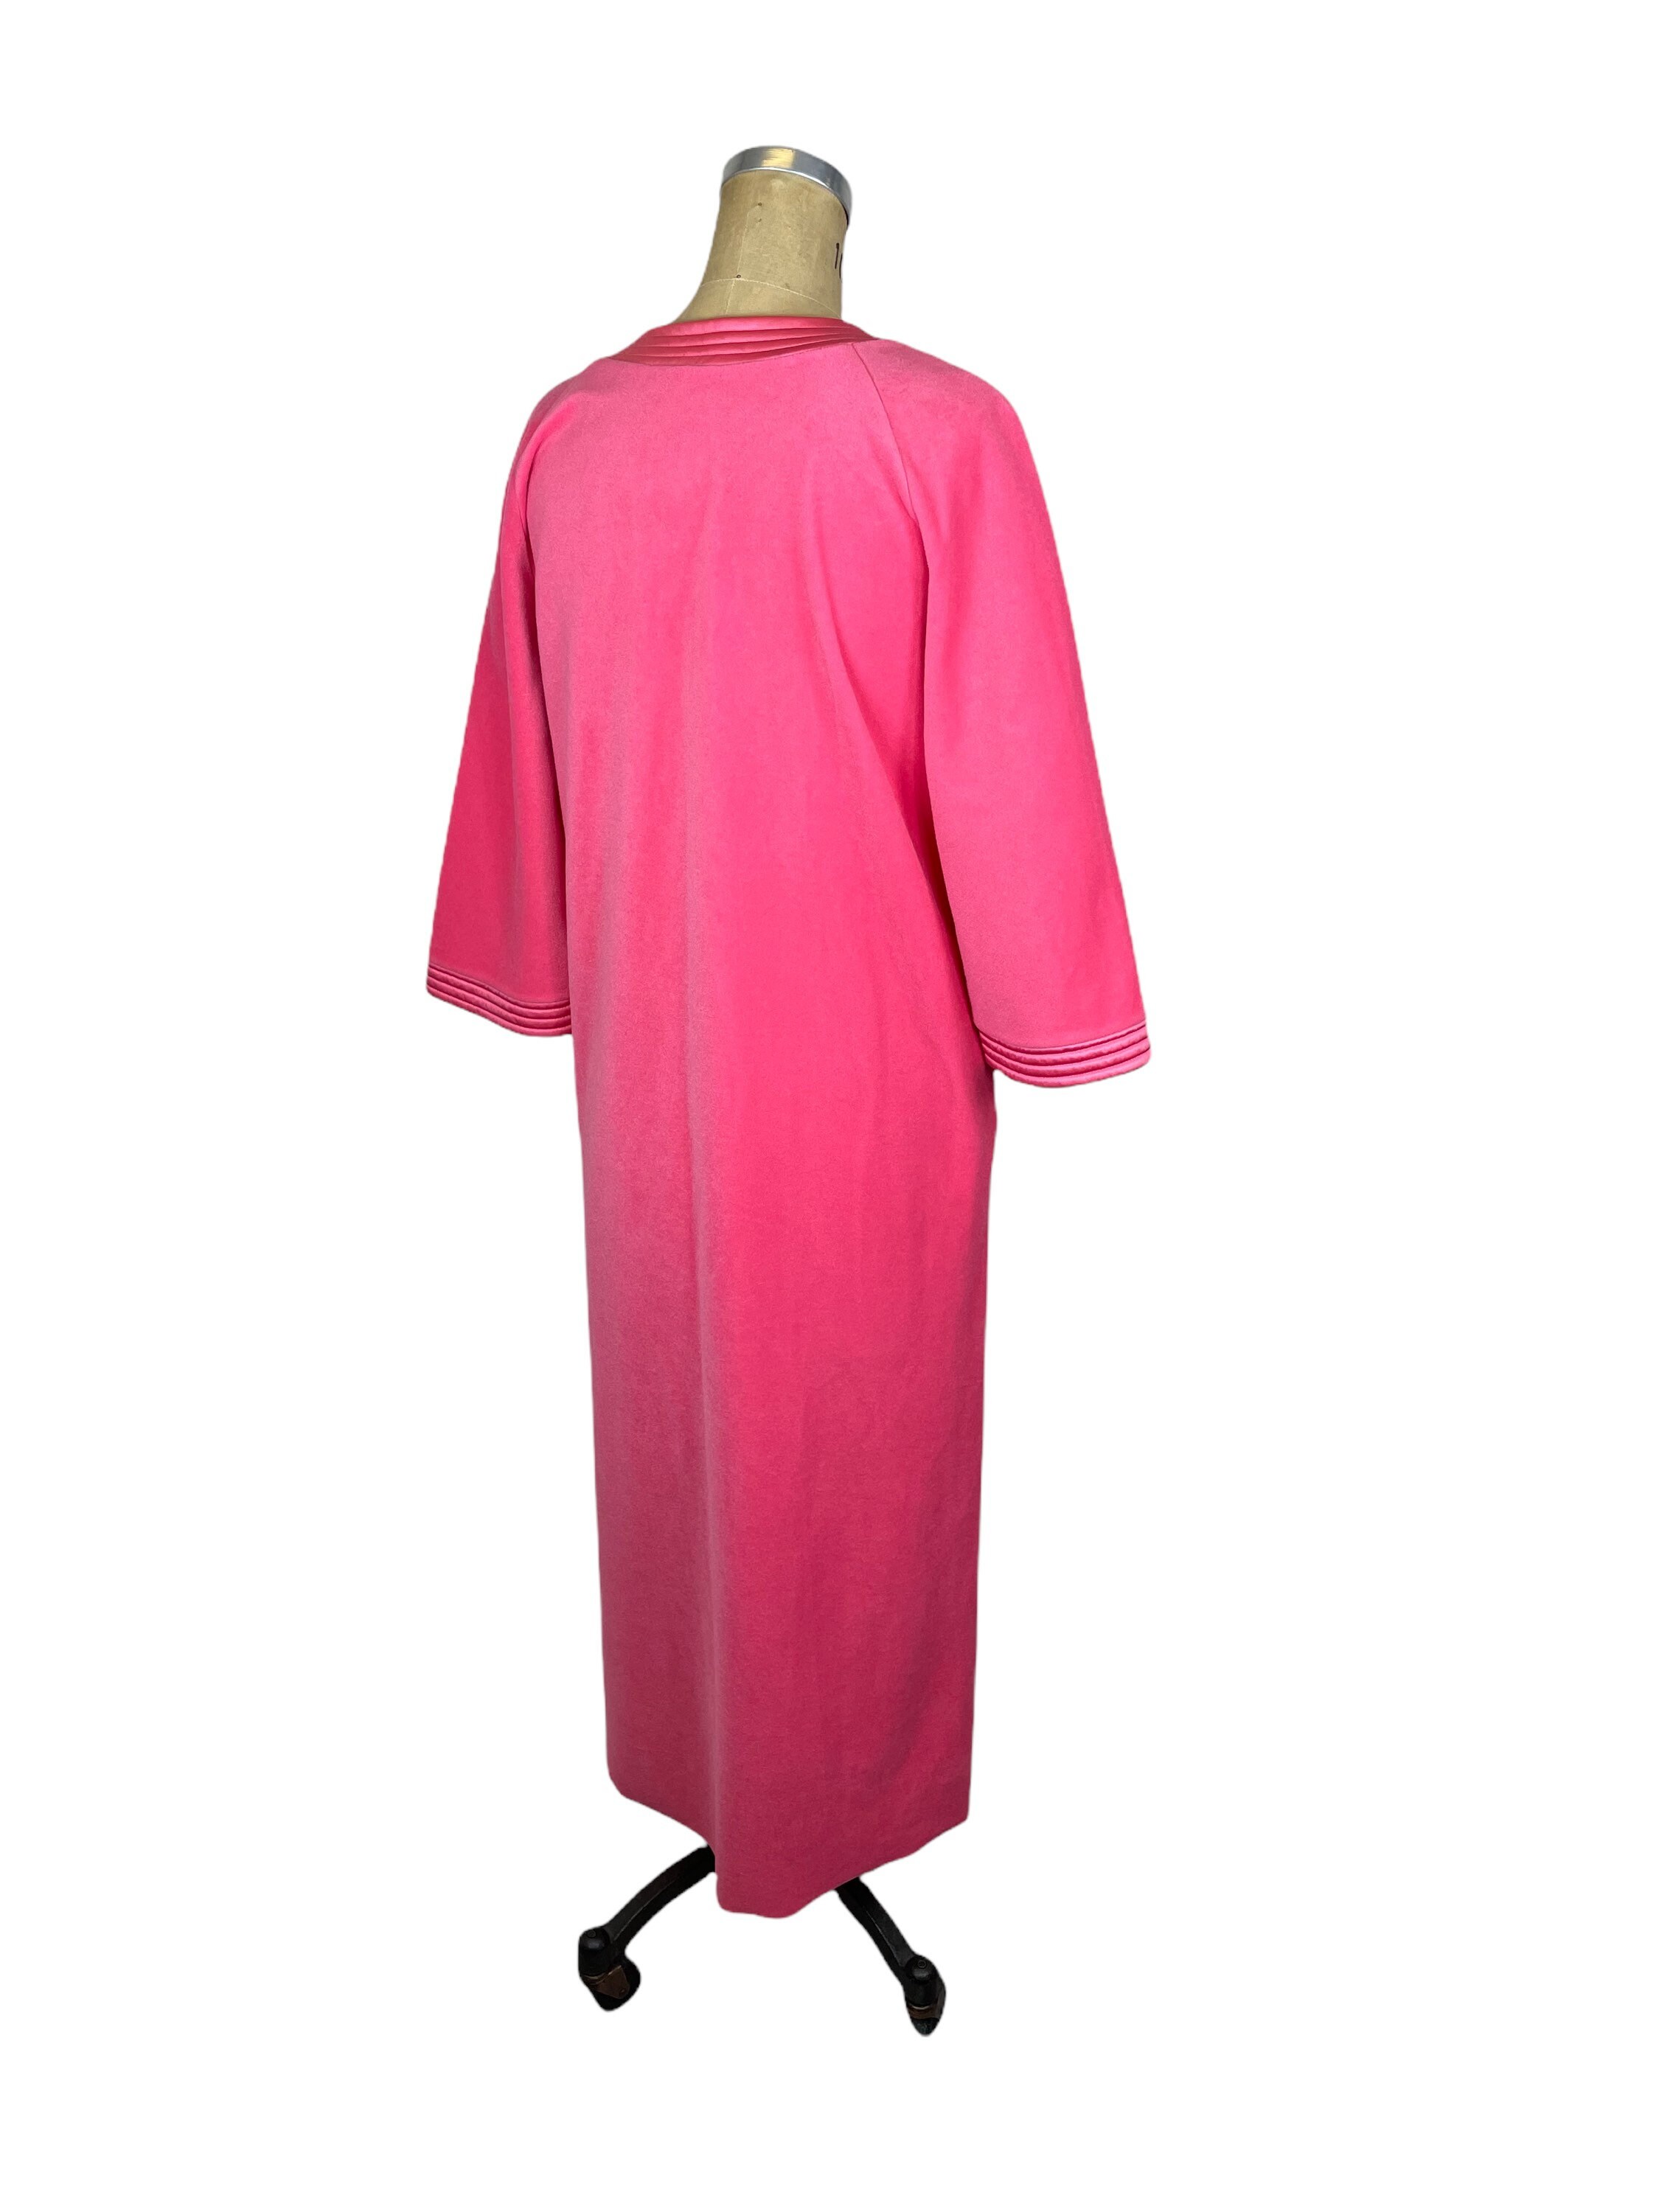 En riesgo Conejo Moretón Pink Velour Robe Zip Front With Satin Trim Size M - Etsy